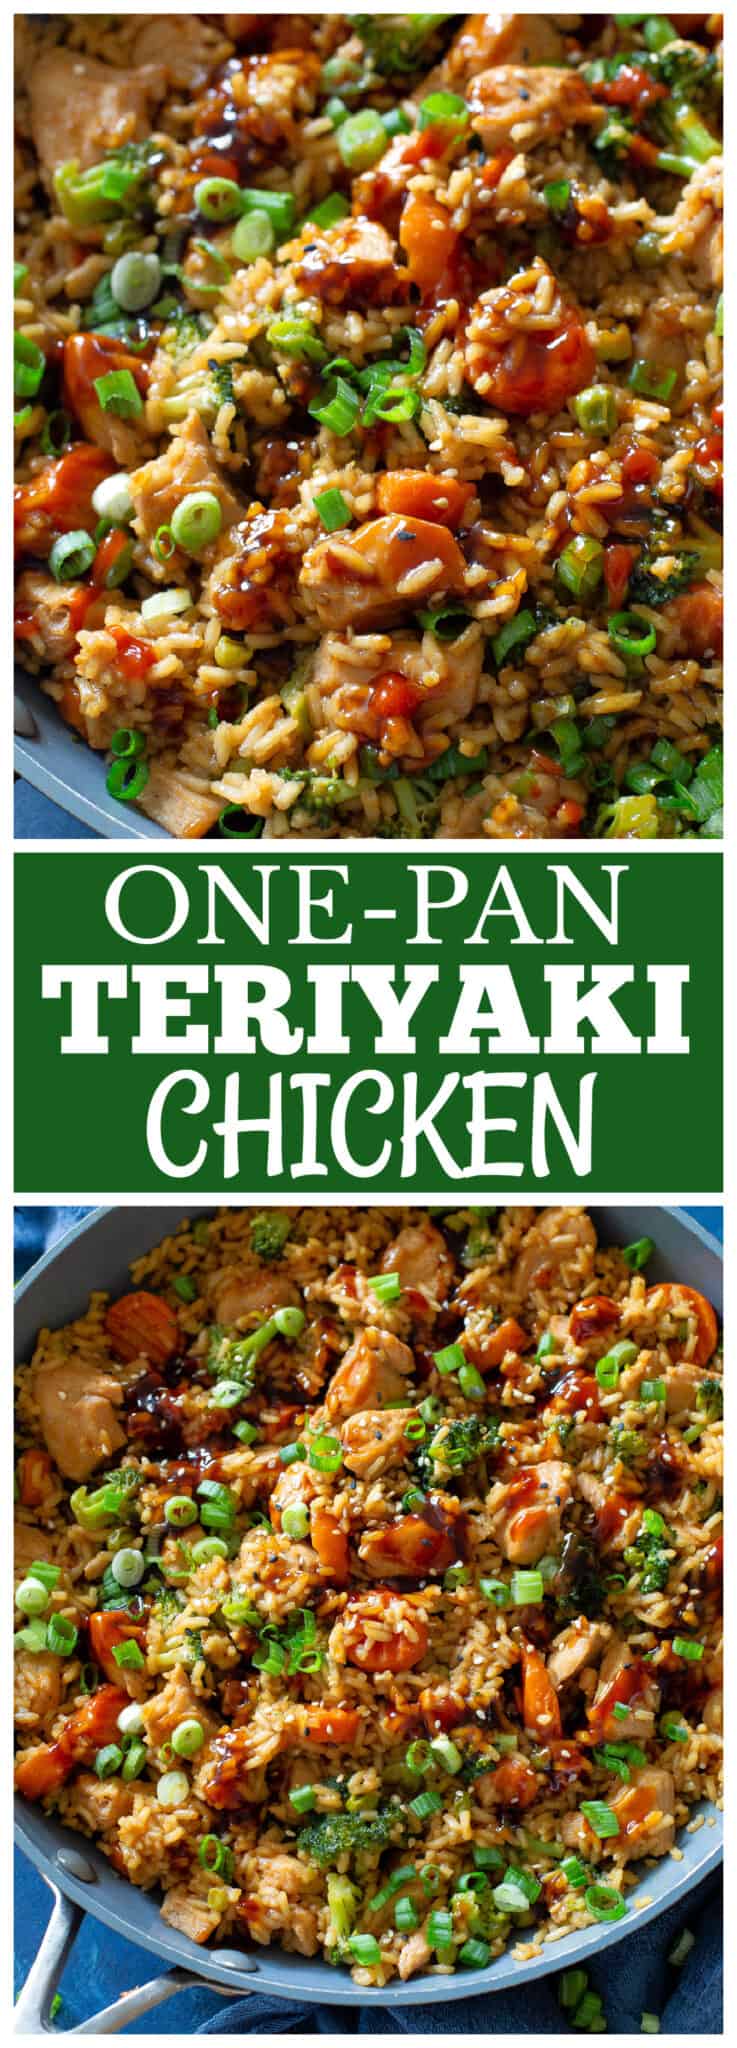 One-Pan Teriyaki Chicken and Rice | The Girl Who Ate Everything